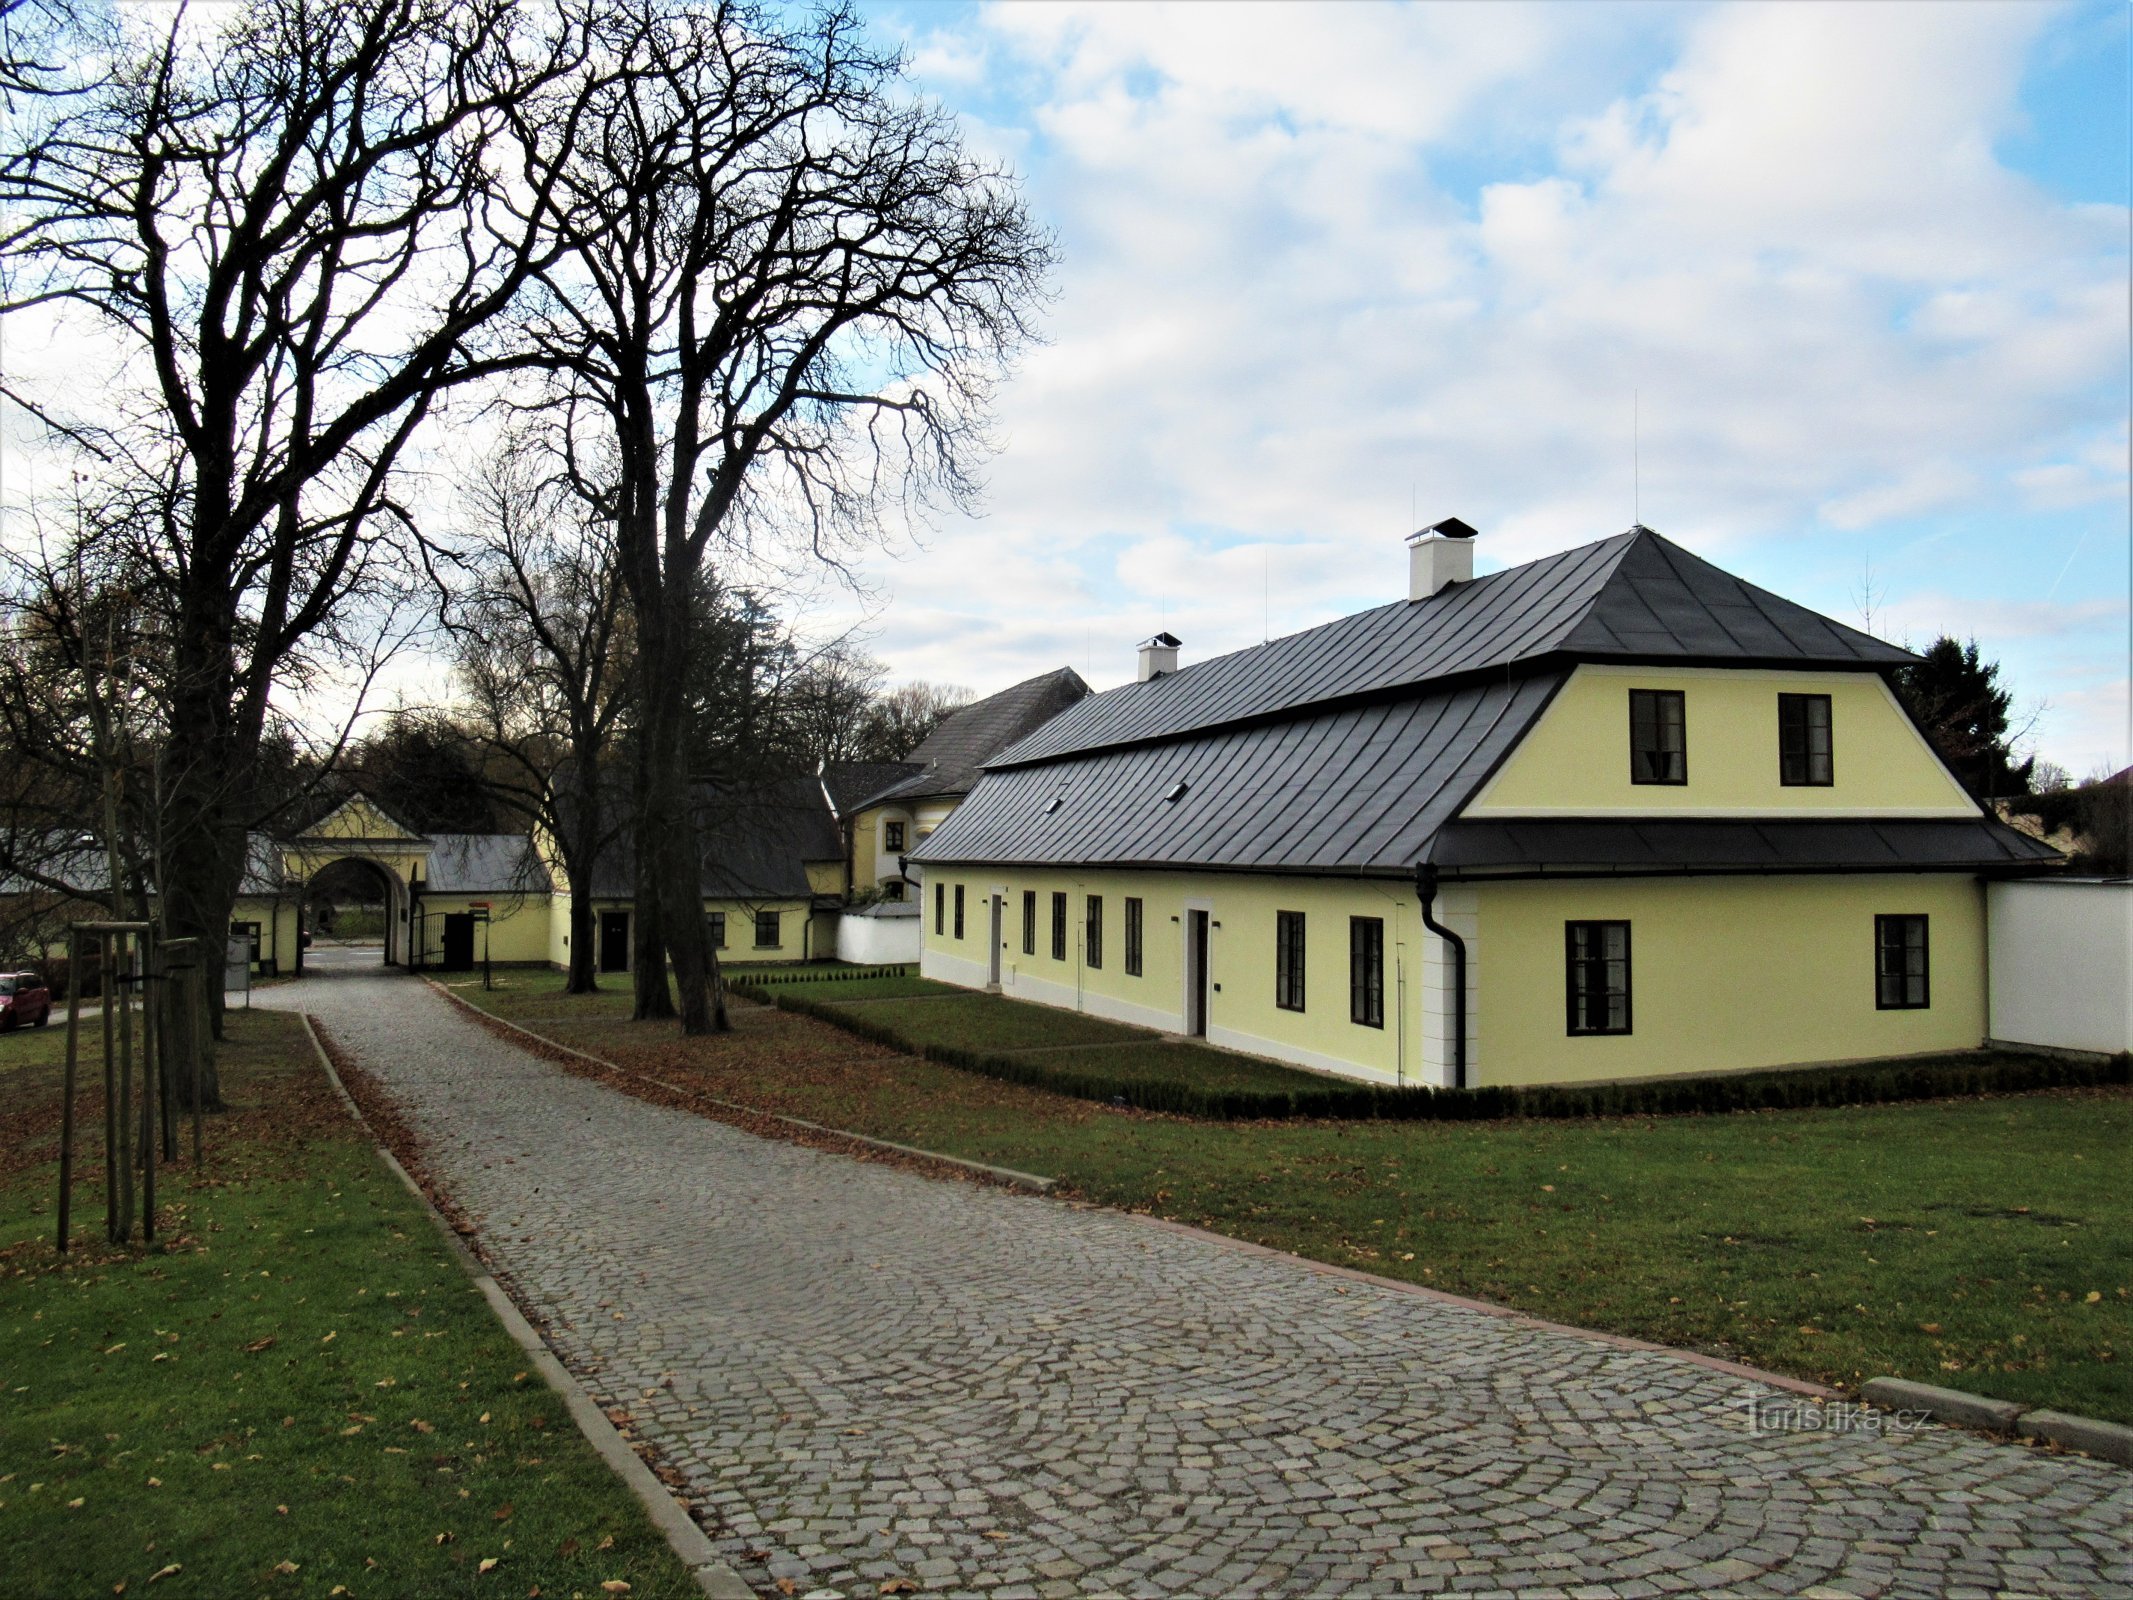 Žďár nad Sázavou - la casa del jardinero cerca del castillo